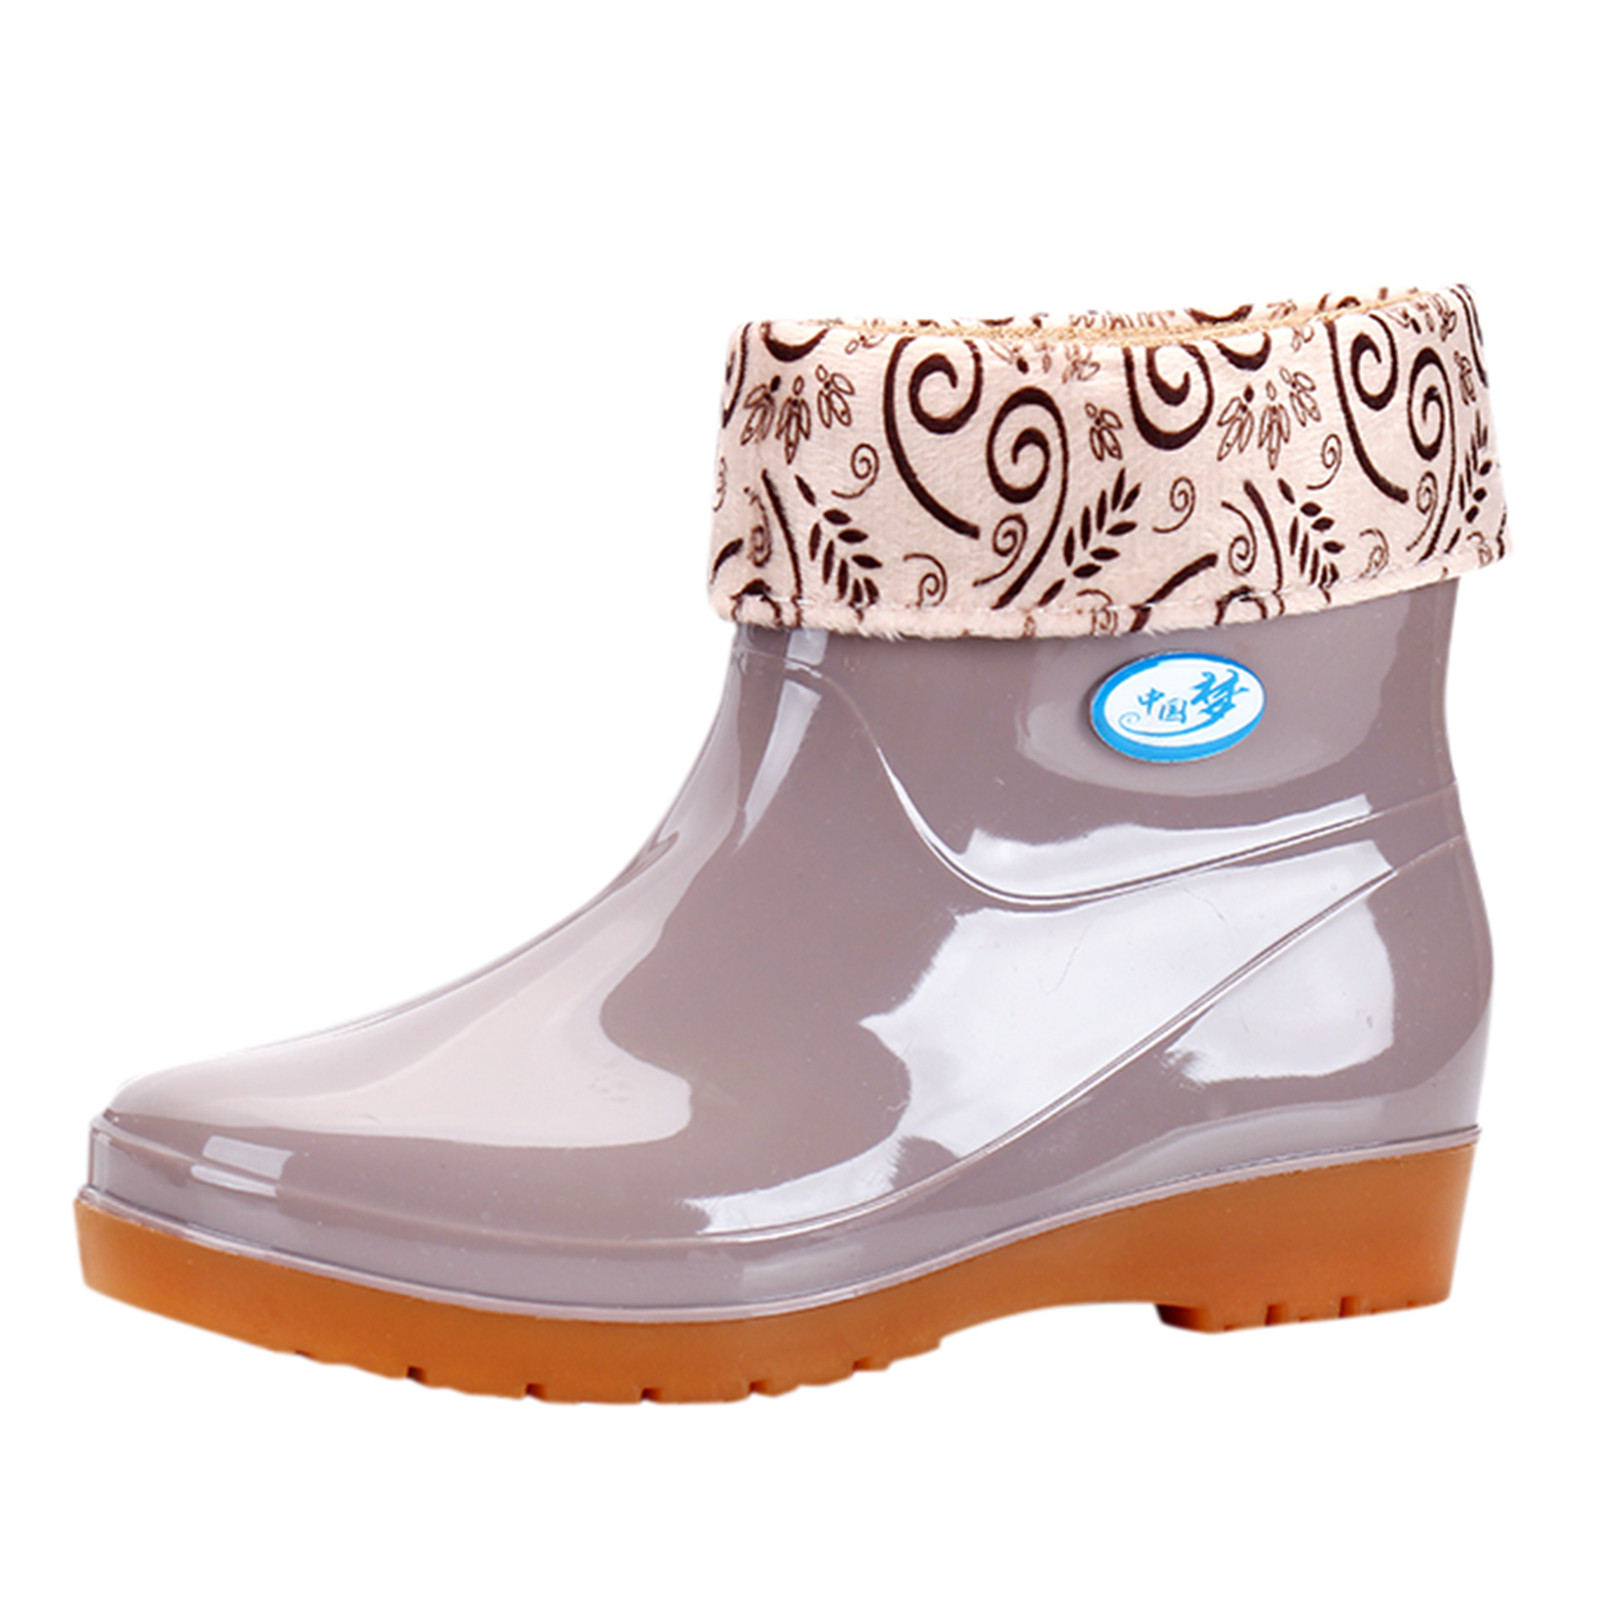 LIANGP Rainshoes Women's Flats Non-slip Round Toe Athletic Shoes ...